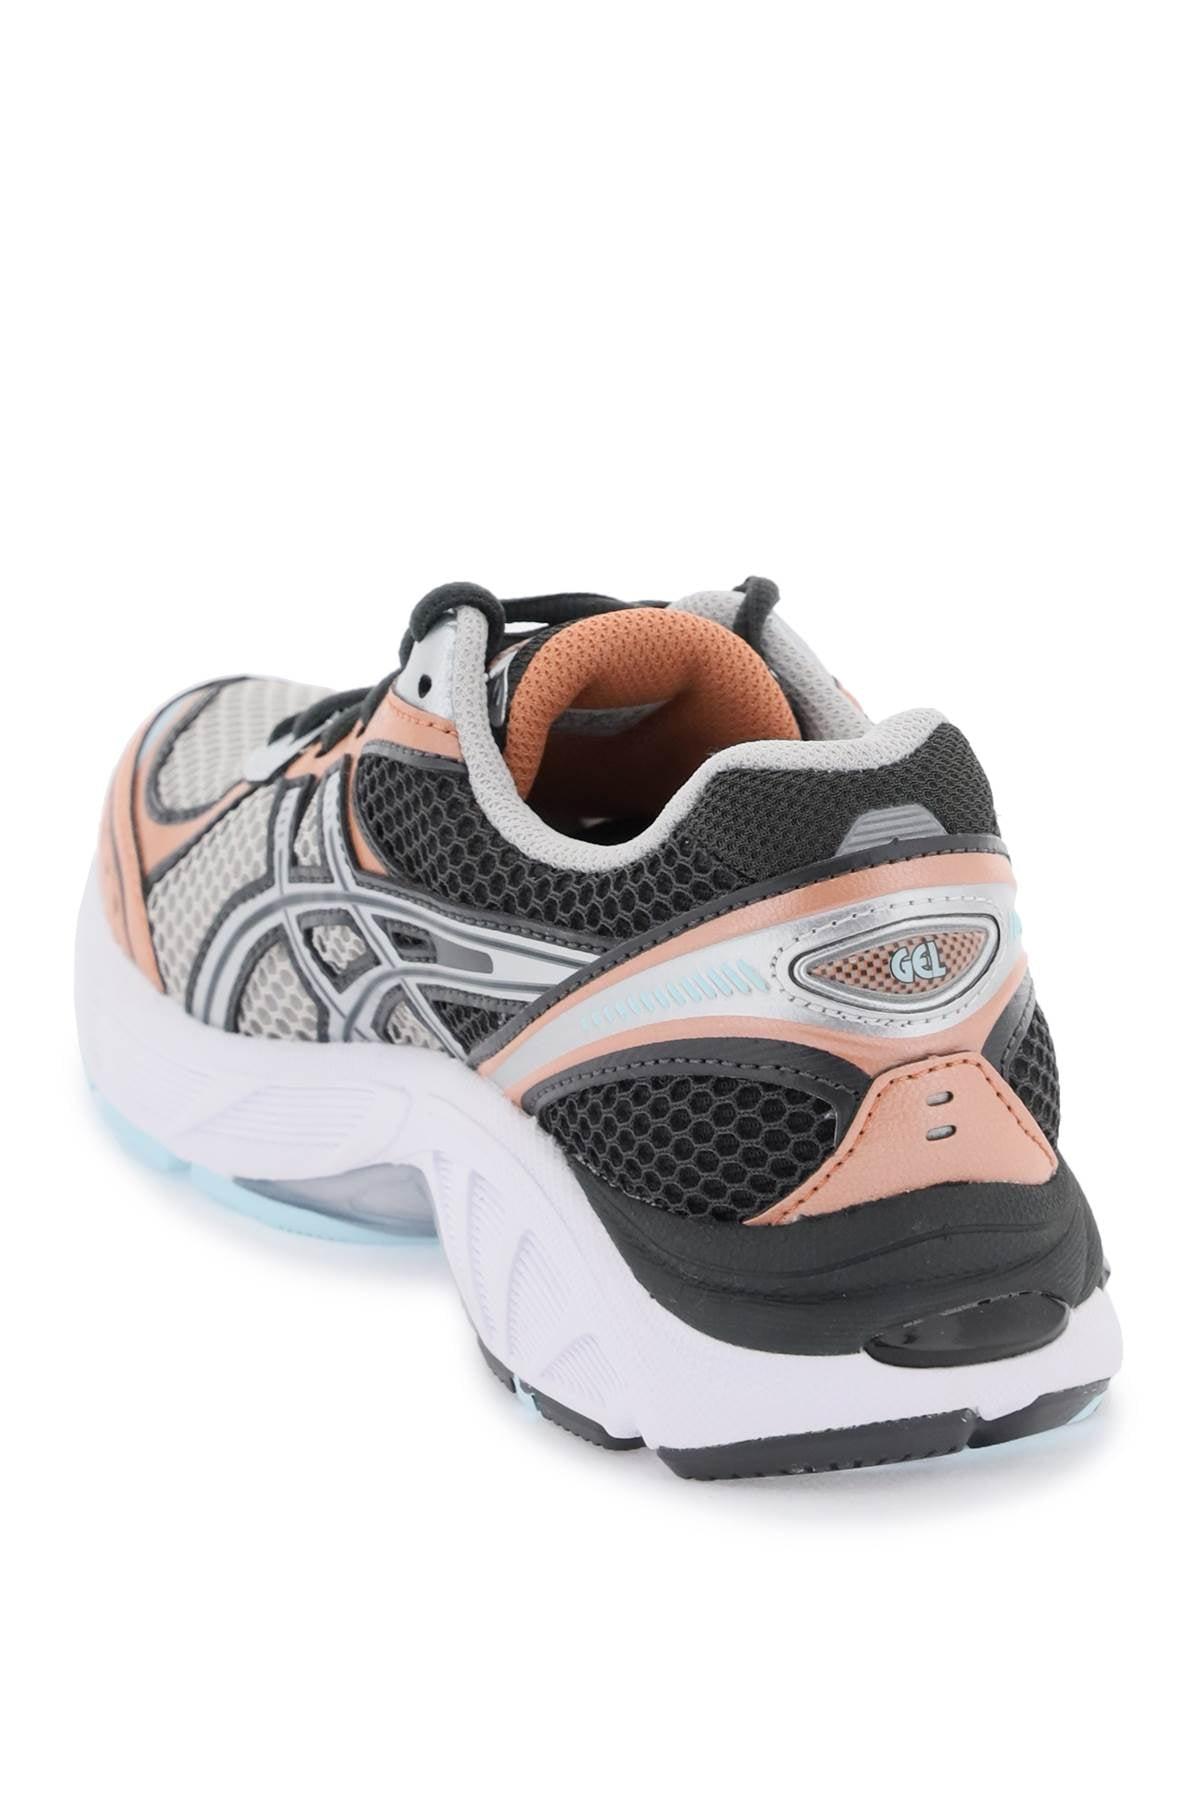 Asics Gt 2160 Sneakers in Gray | Lyst